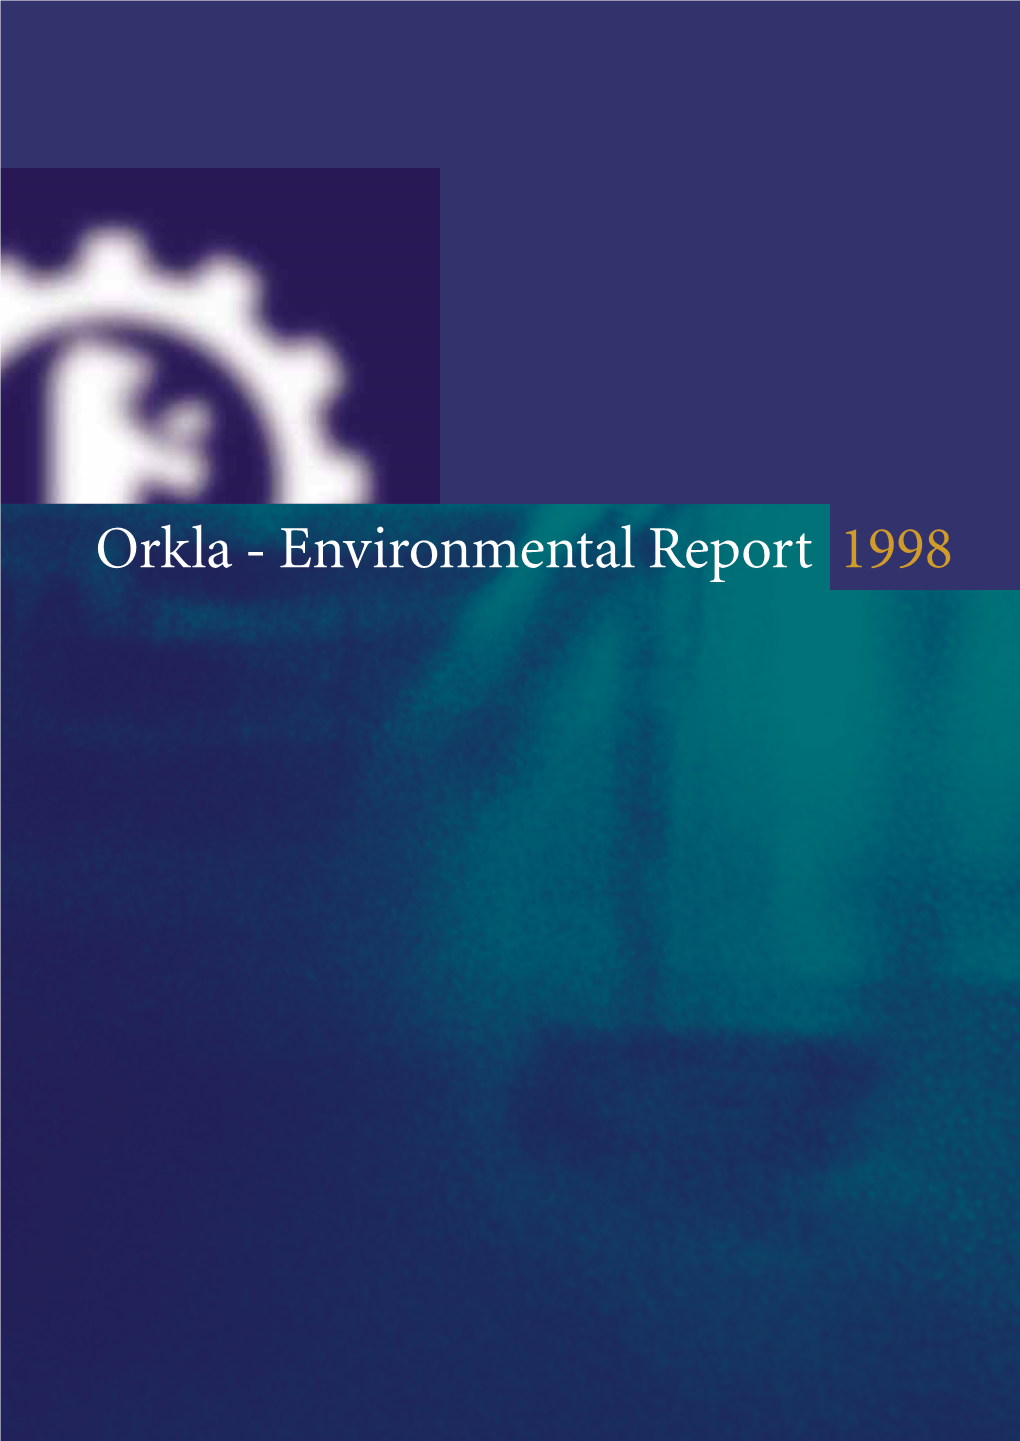 Environmental Report 1998 Contents